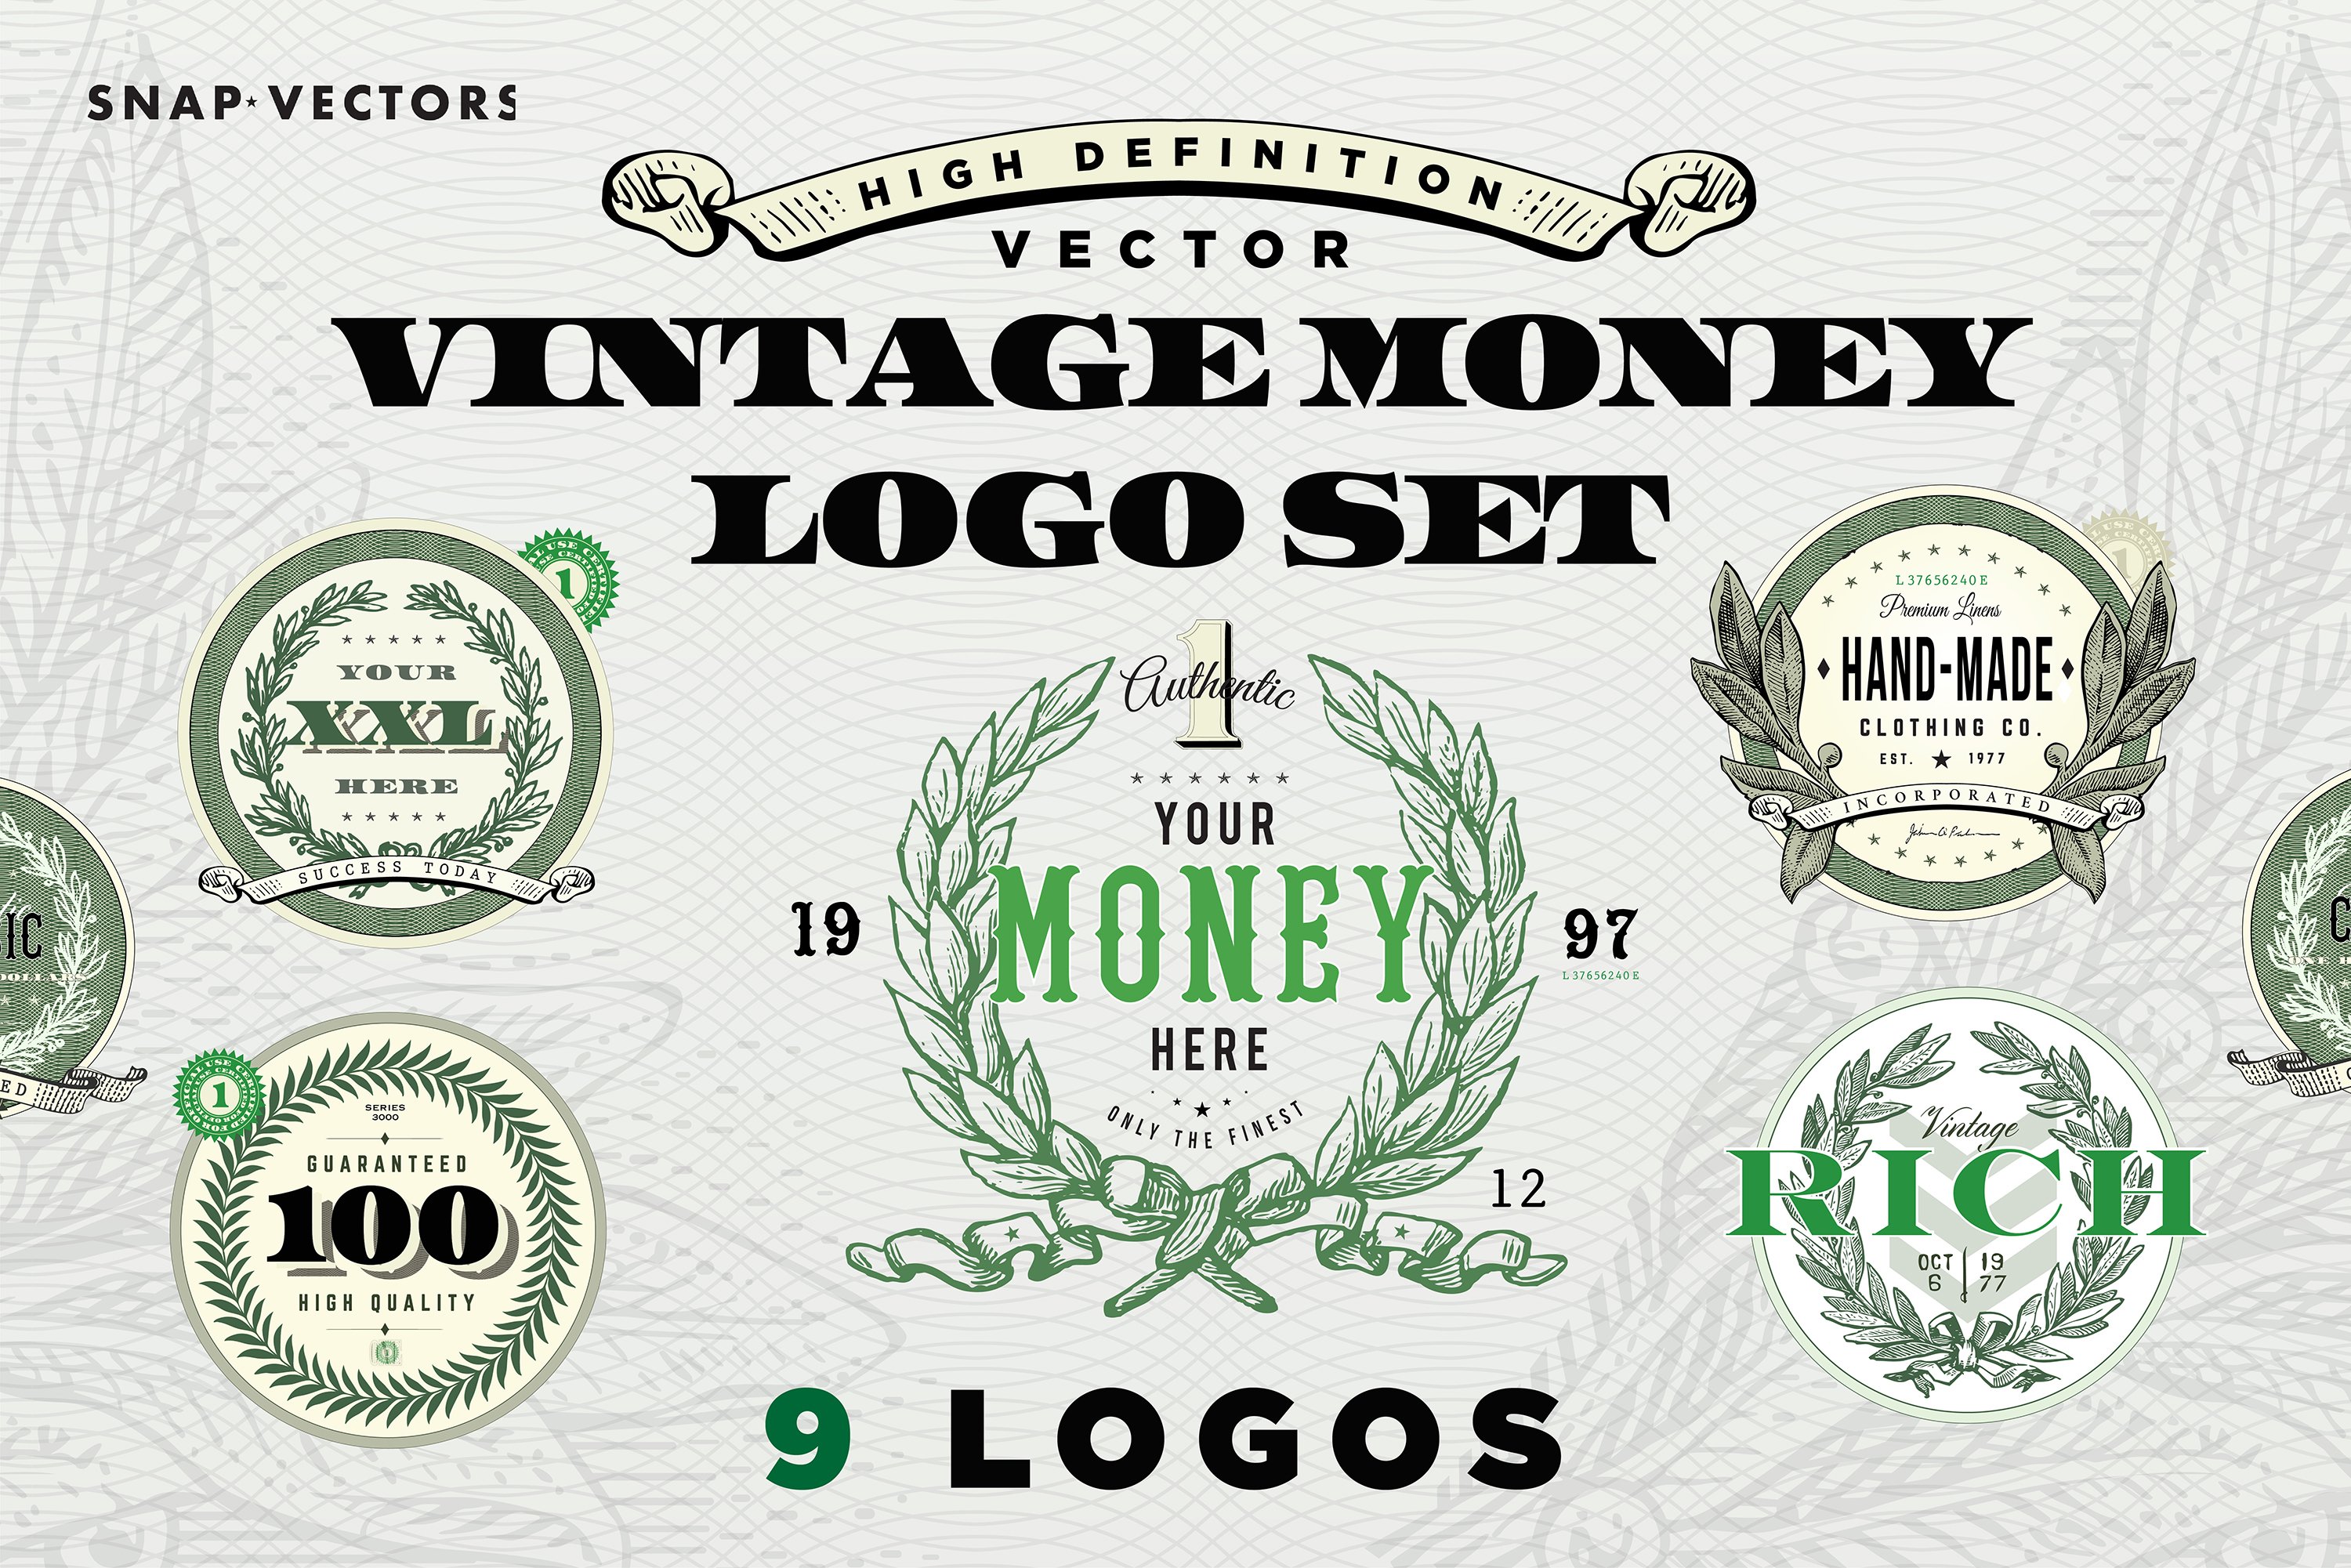 Vintage money logo set.